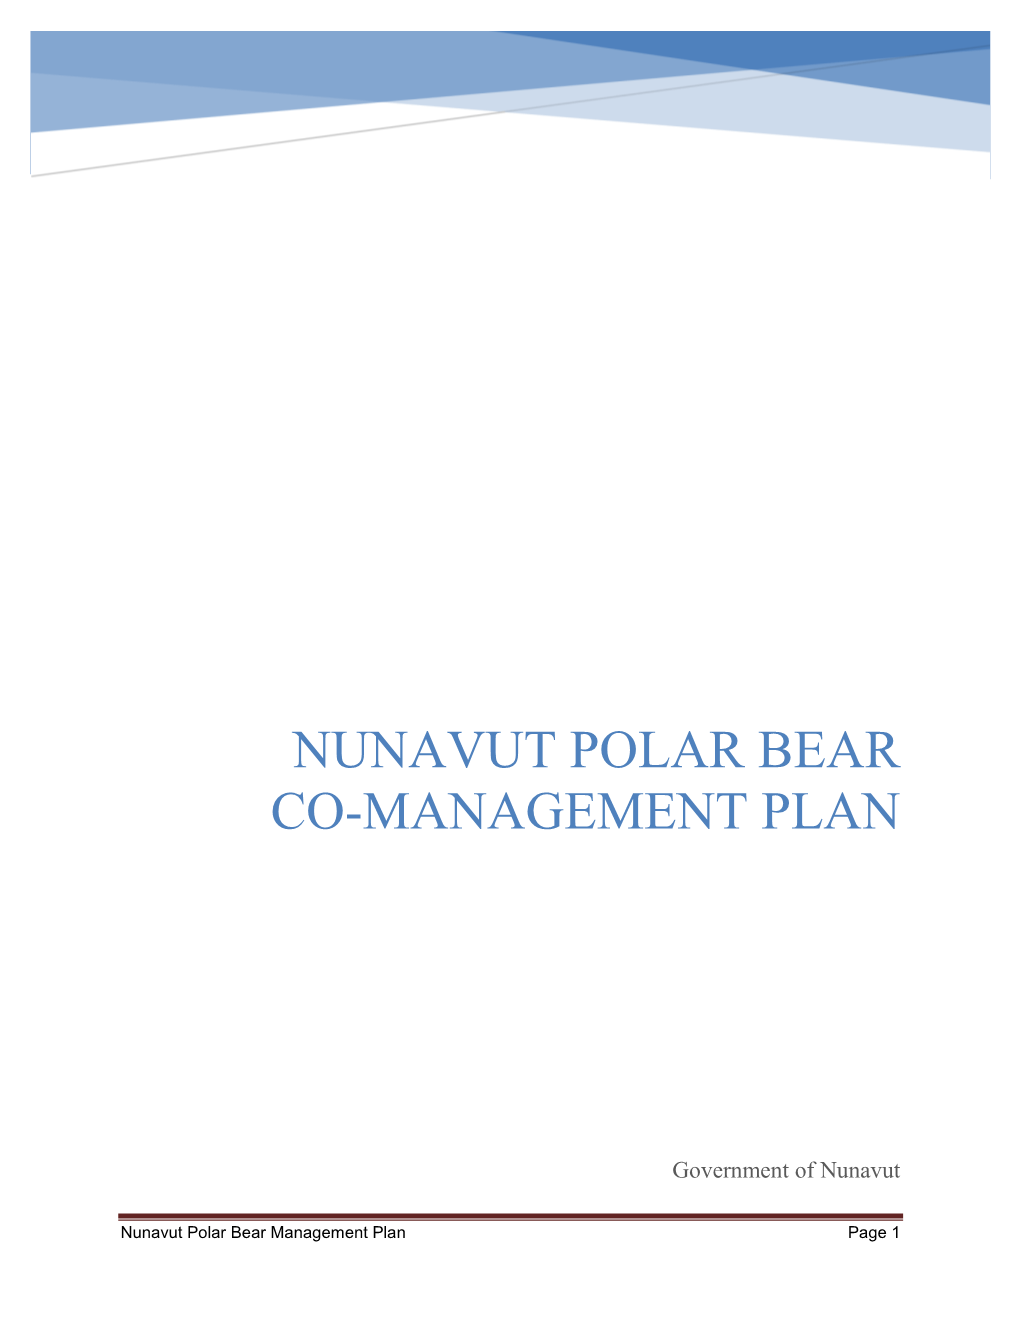 Nunavut Polar Bear Co-Management Plan